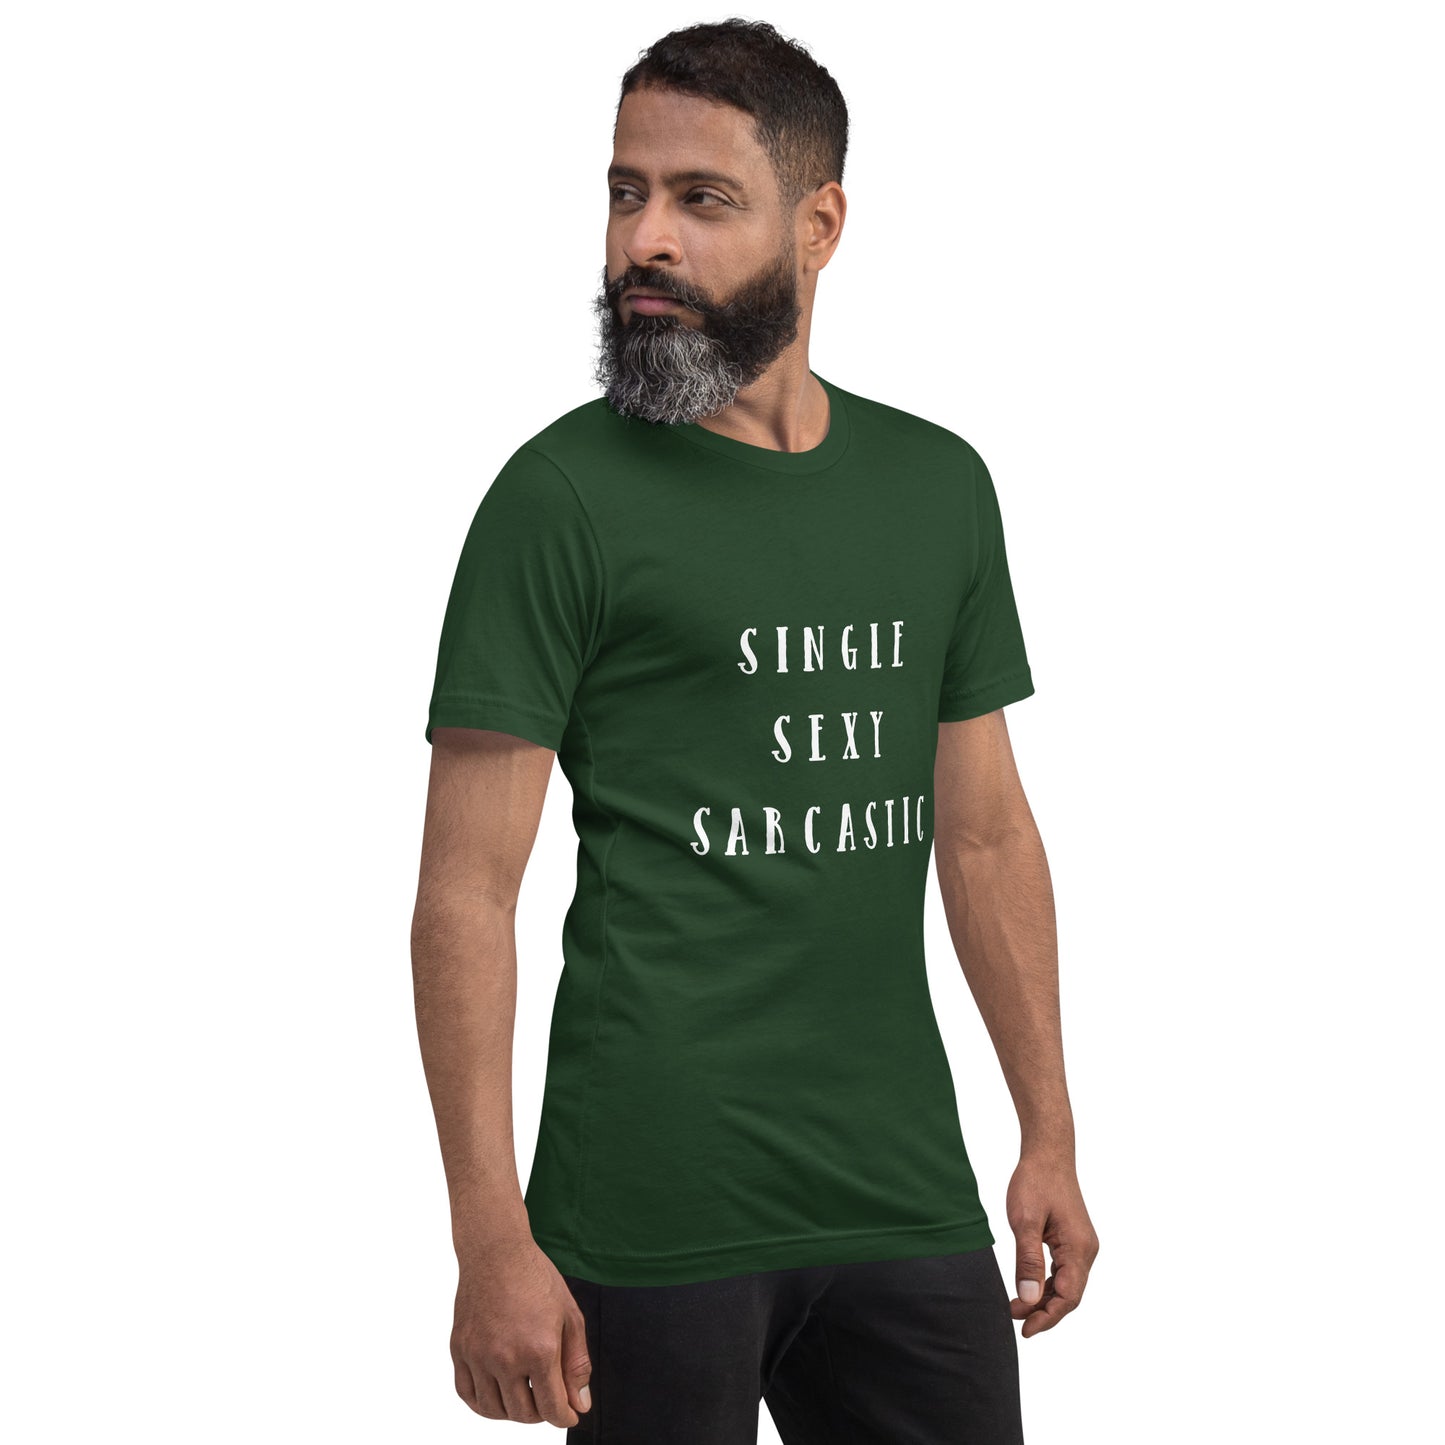 "Sarcastic Shirt" Unisex T-shirt